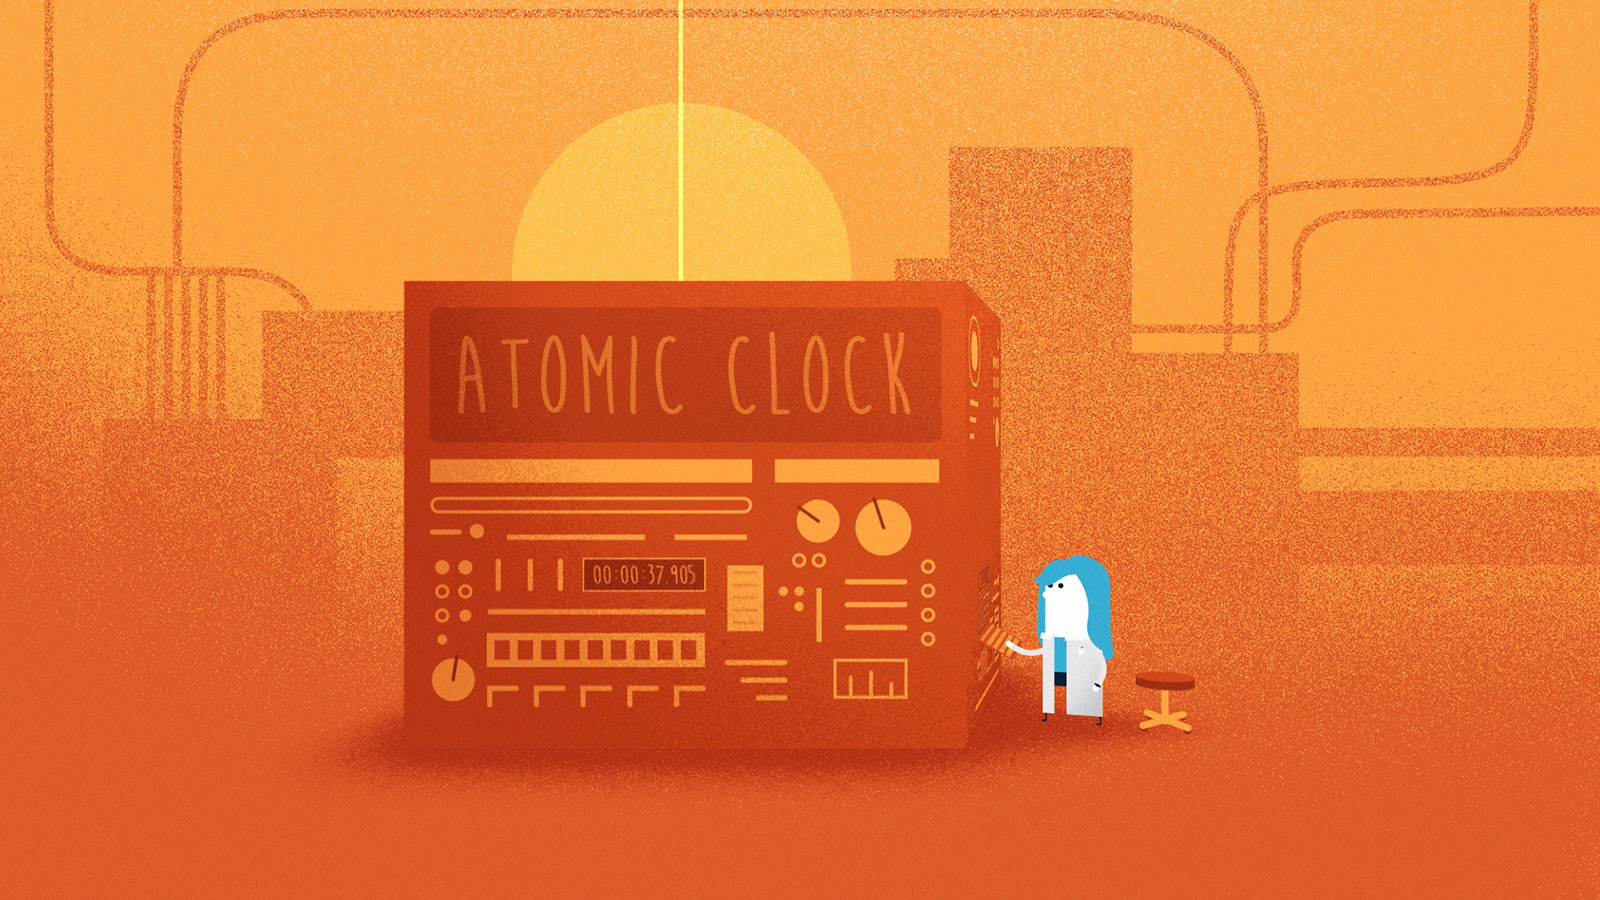 Artist's concept of atomic clock